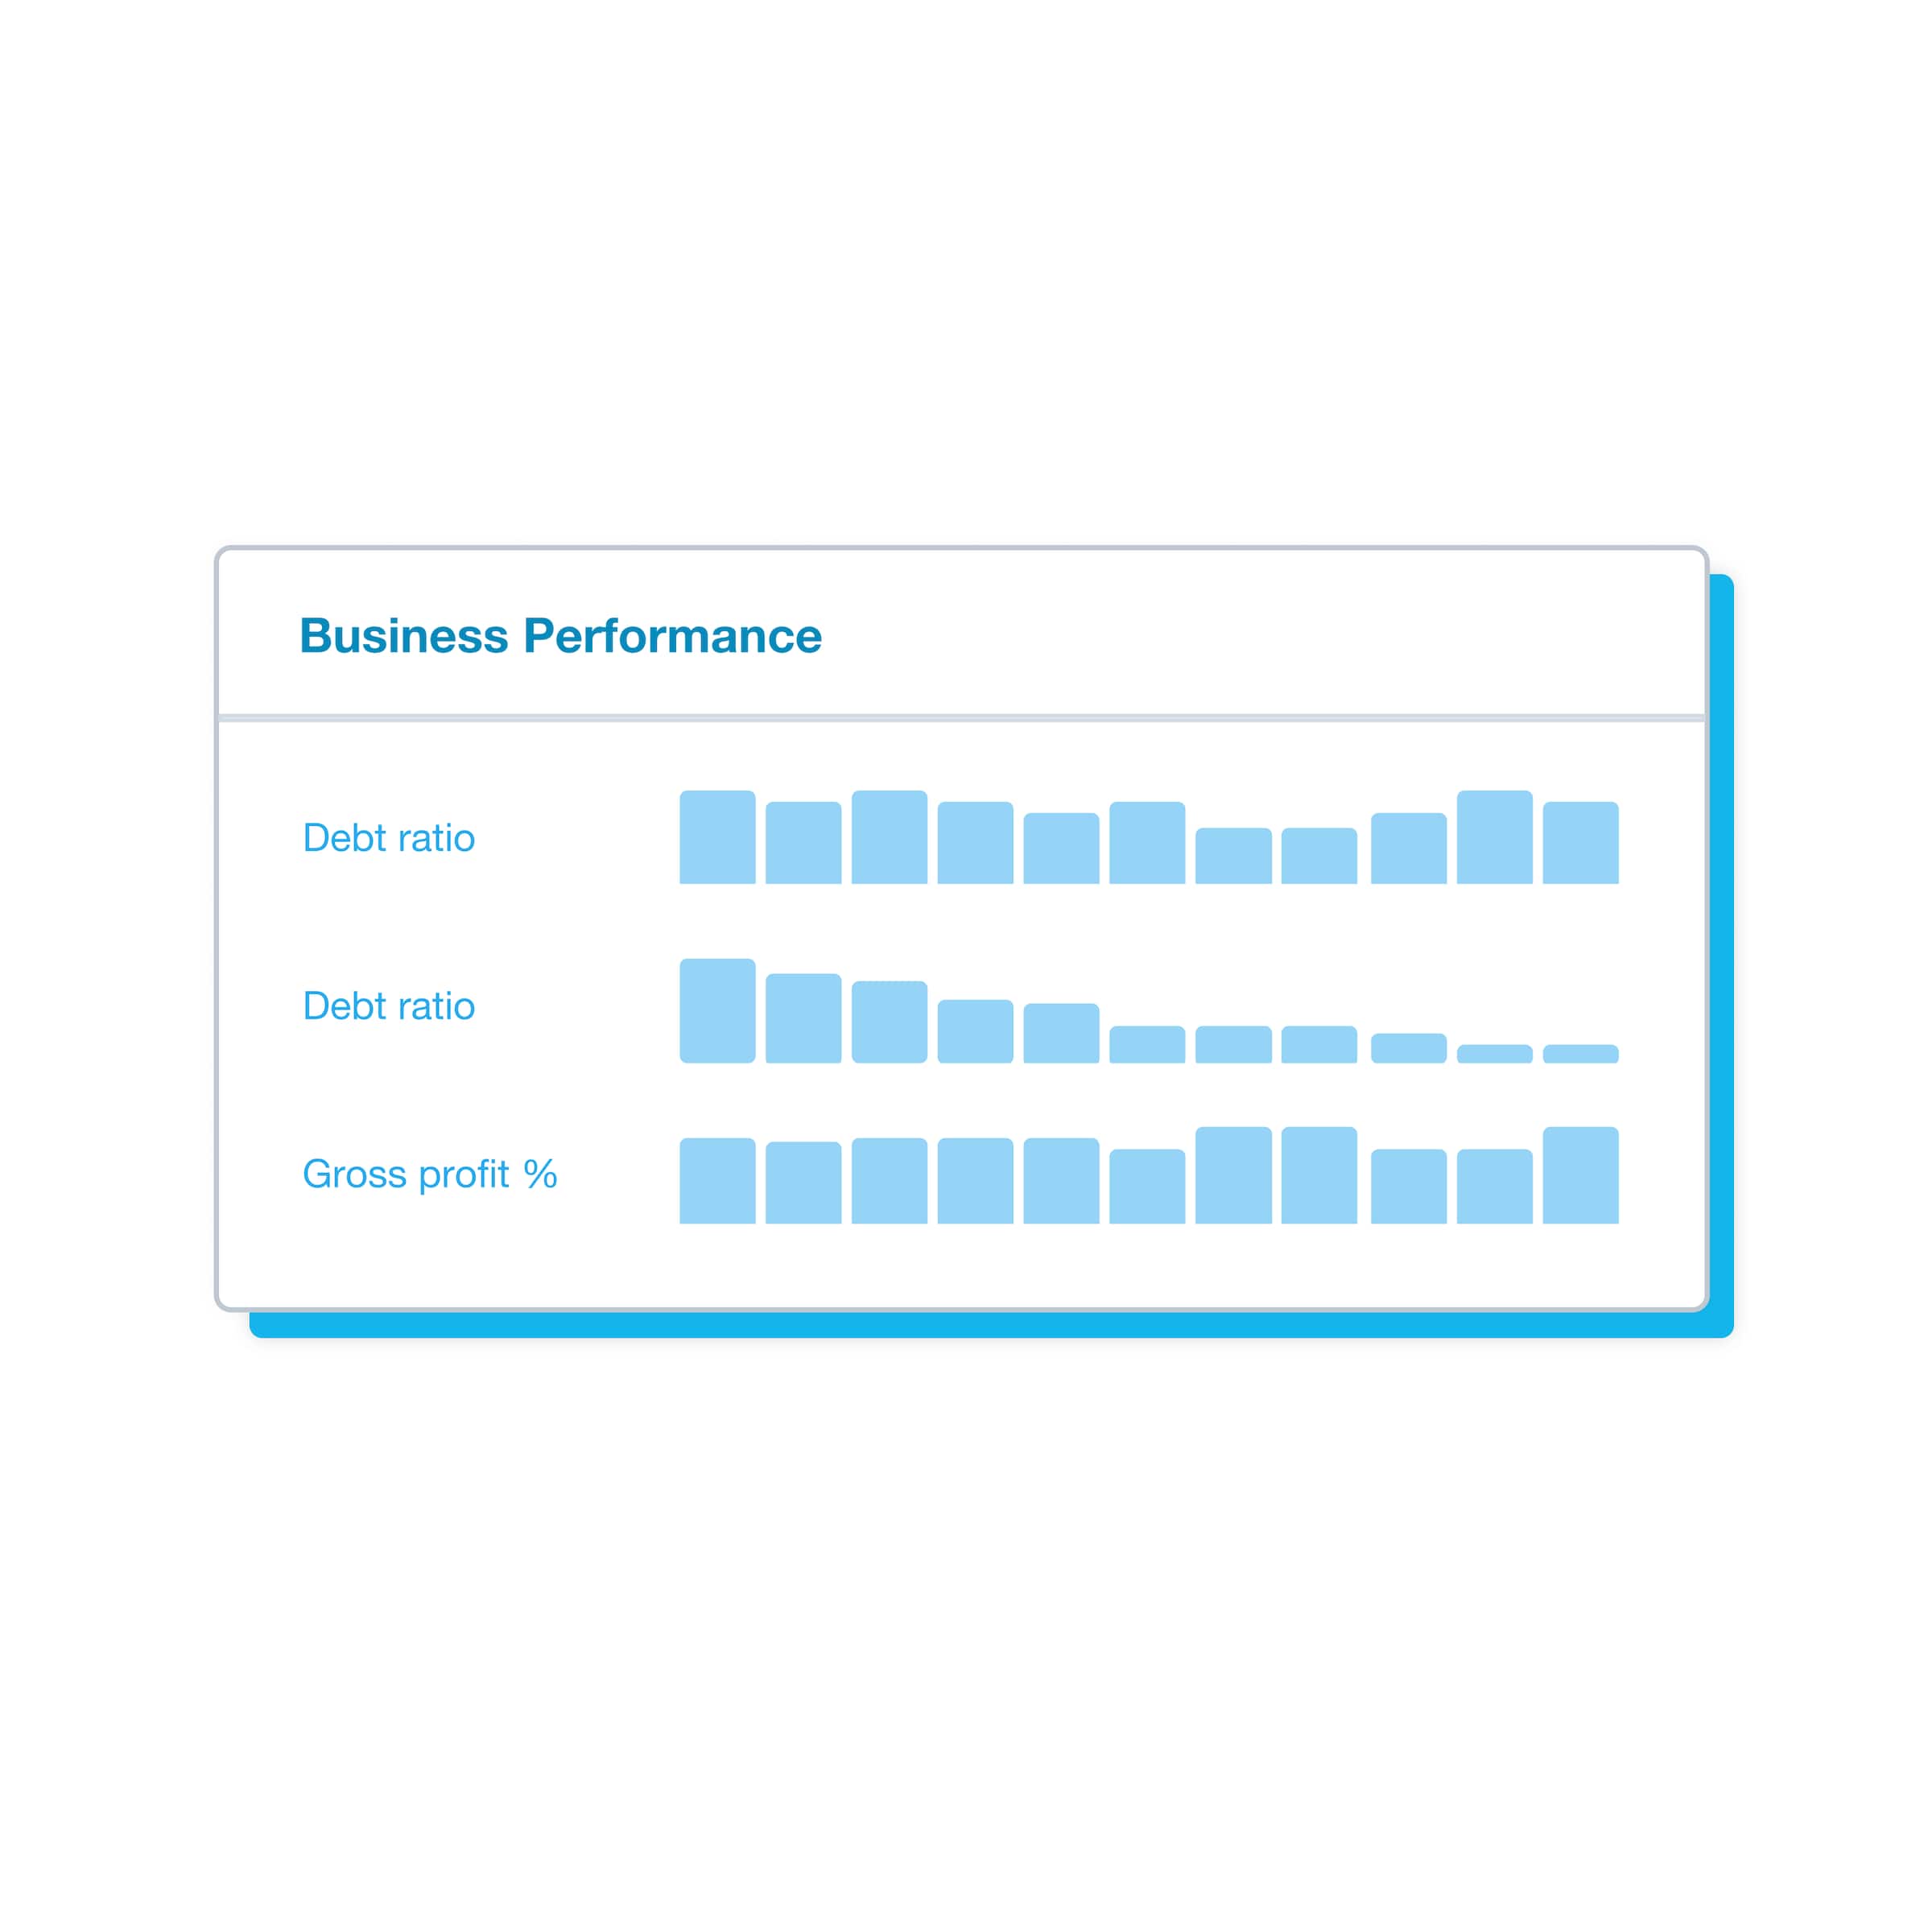 Three bar charts on the business performance dashboard show business metrics like debt ratio and gross profit.